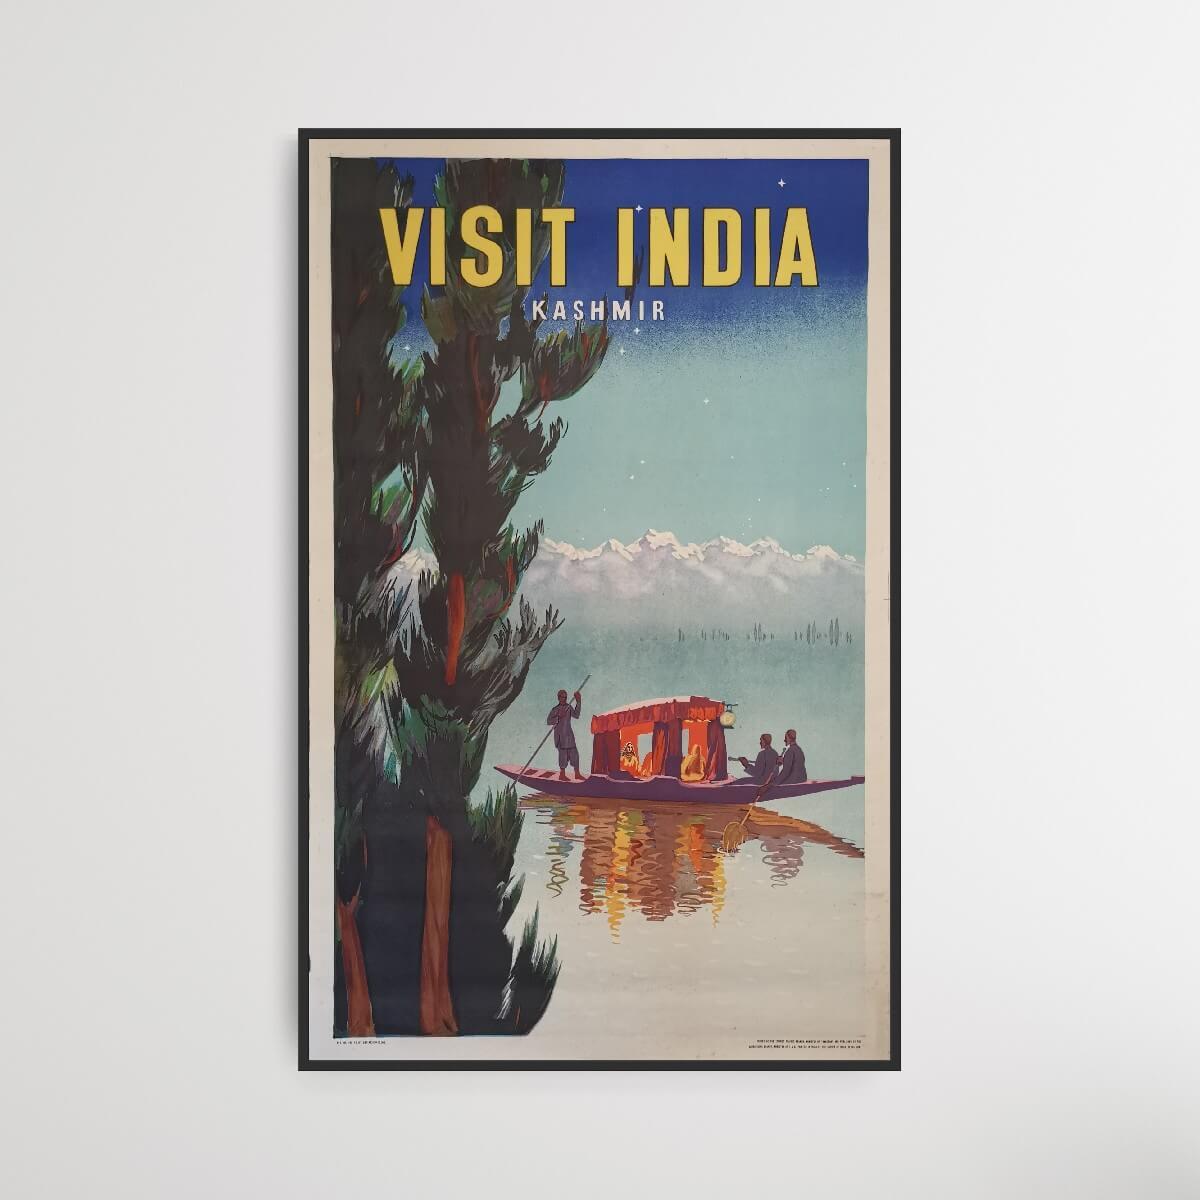 Visit India - Kashmir